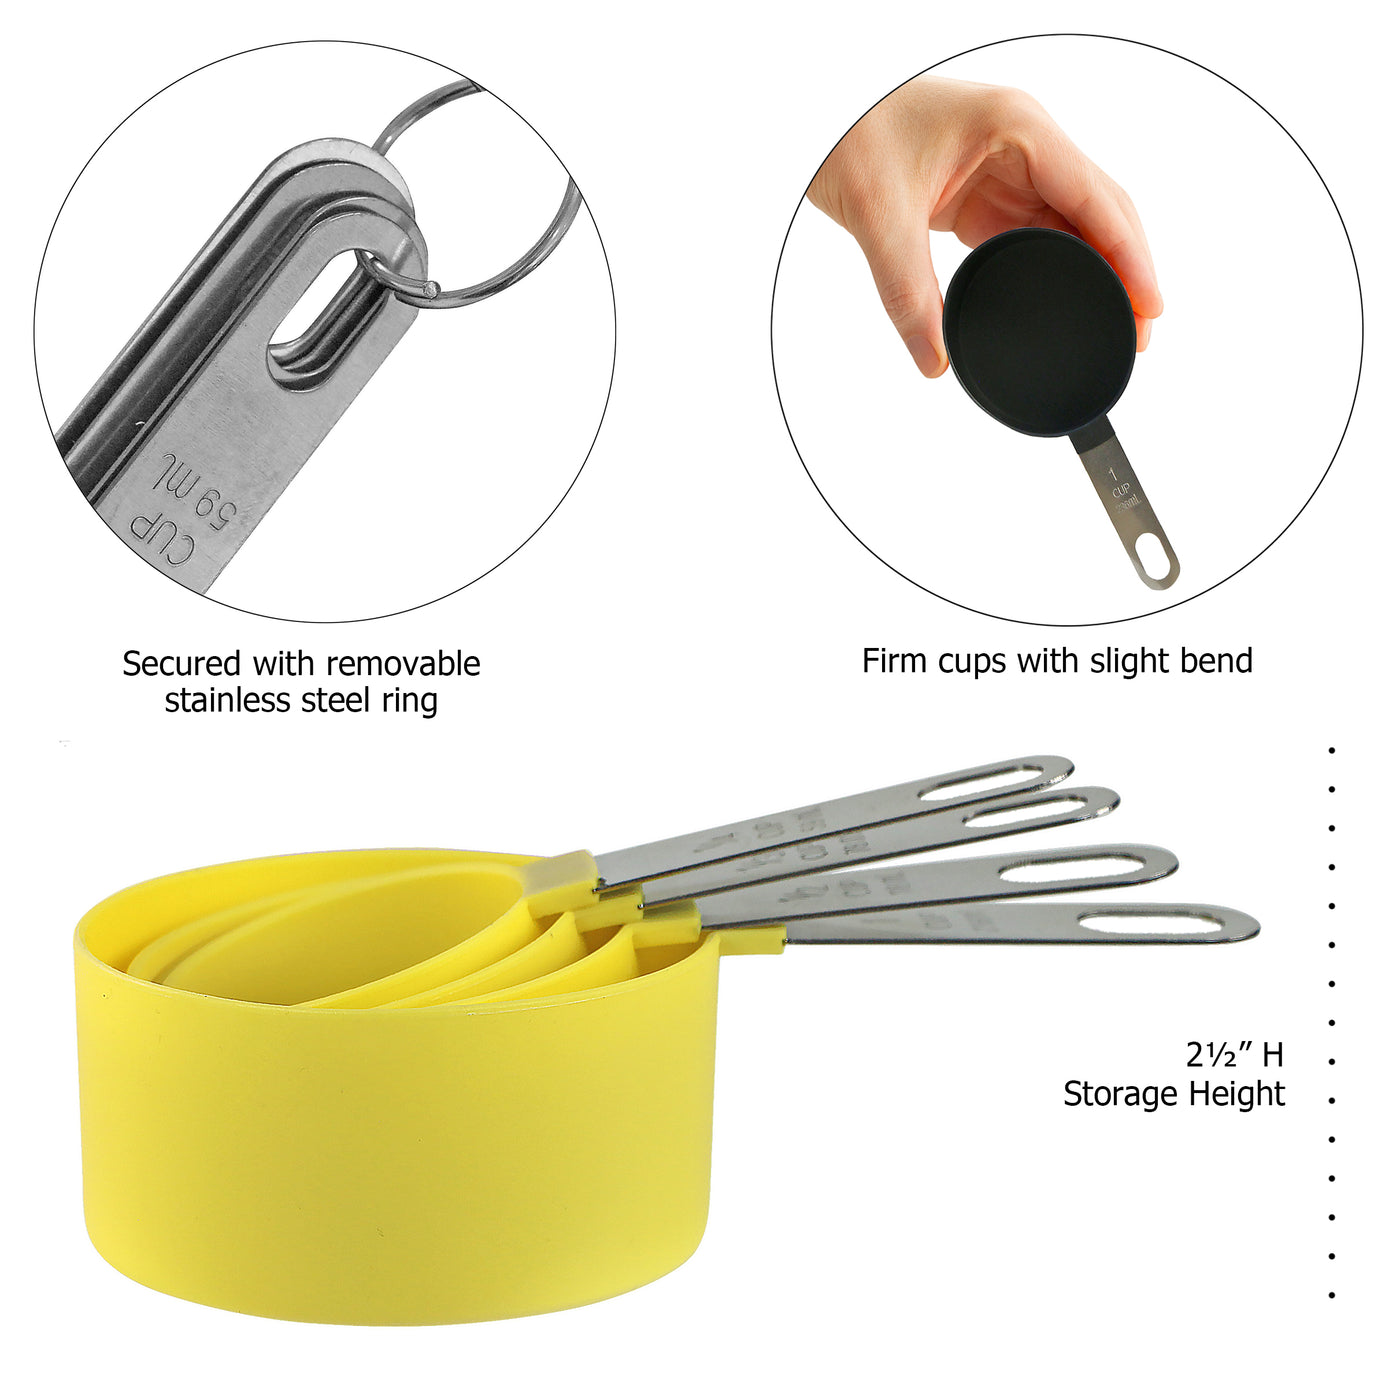 8pc Measuring Spoon & Cup Set, Lemon – Reston Lloyd